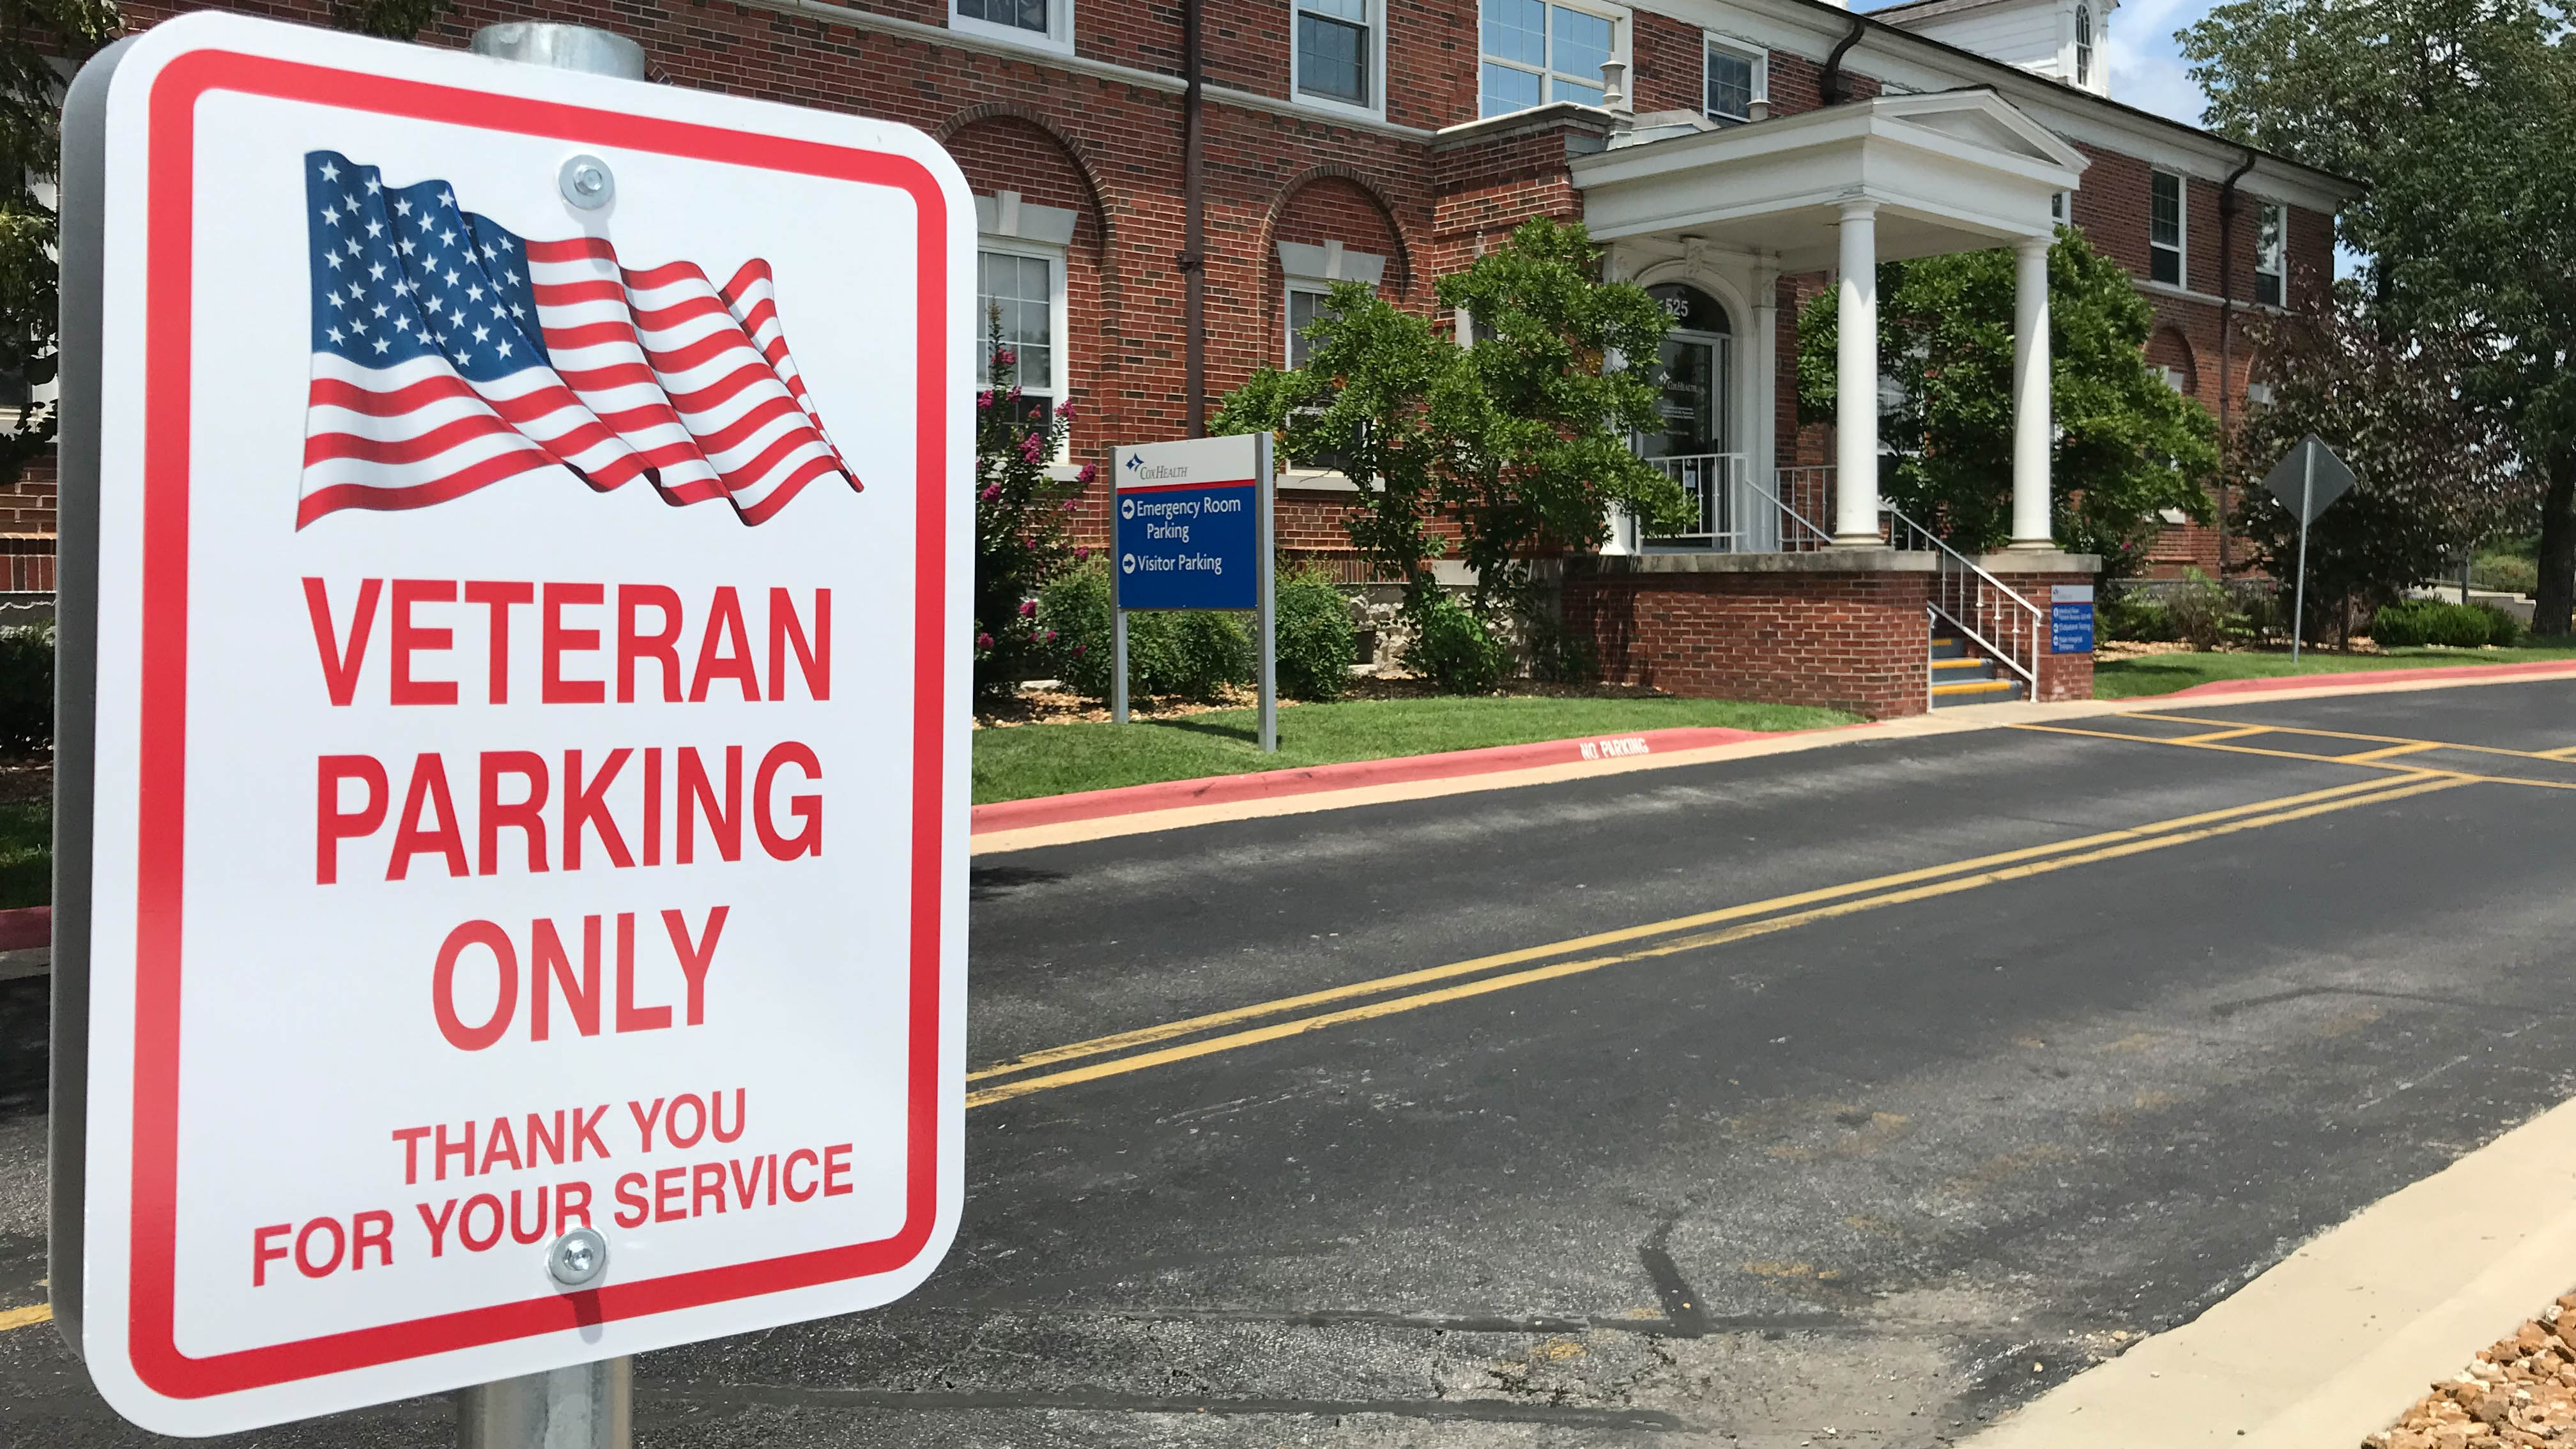 VeteransParking - Cox Medical Center Branson adds VIP parking for Veterans